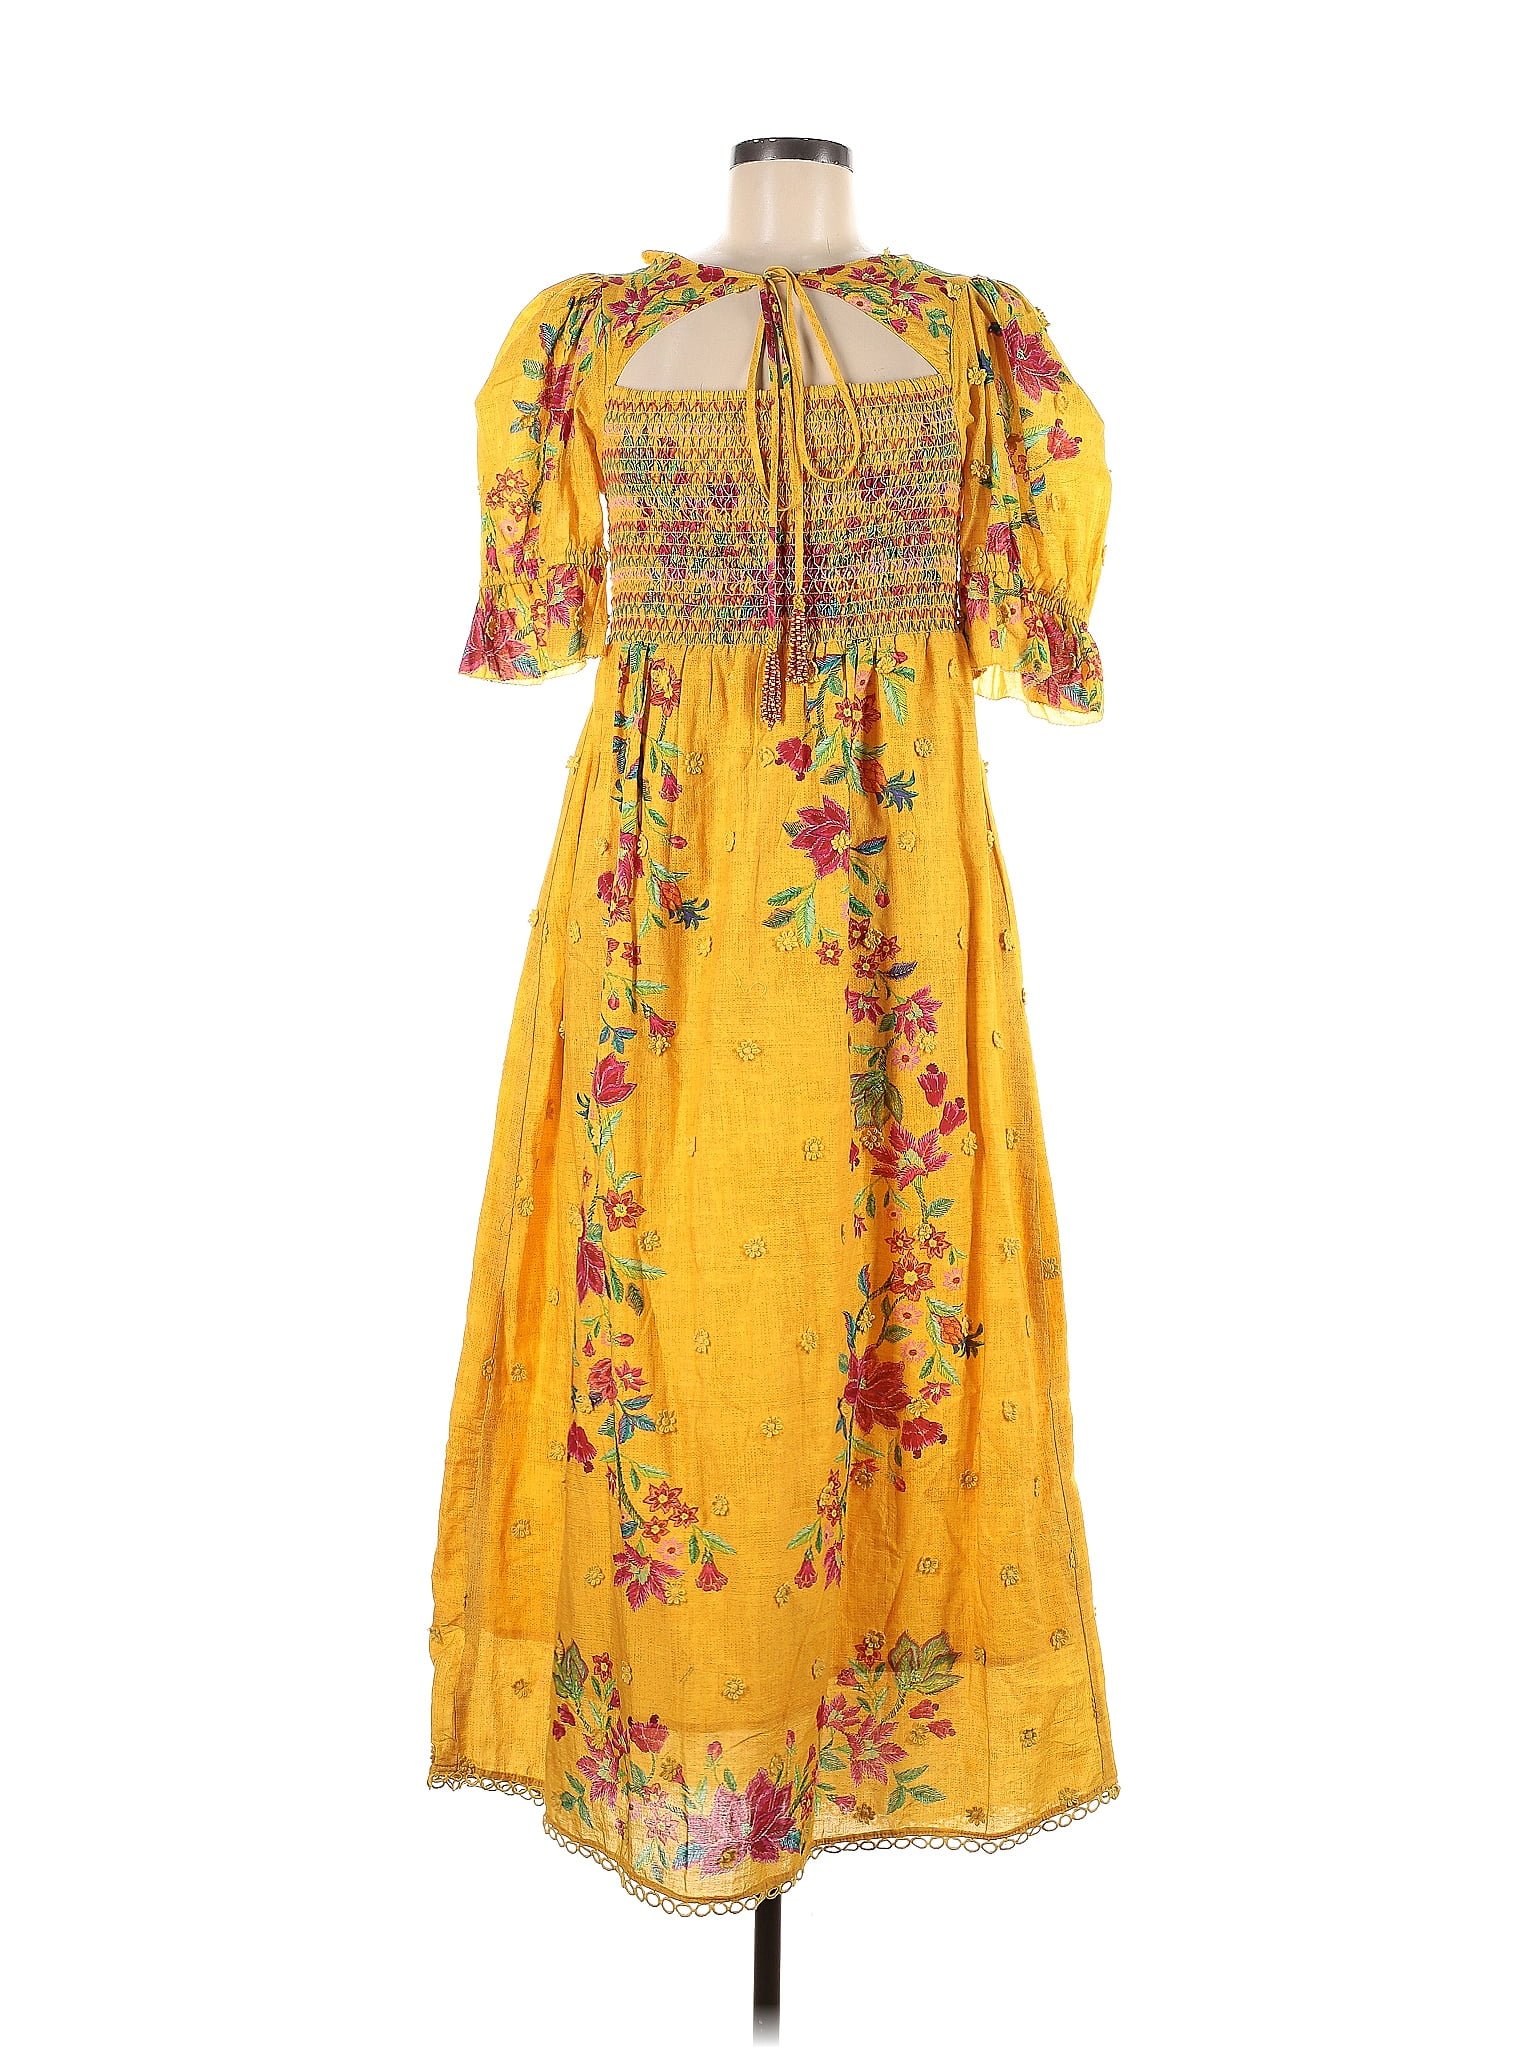 FARM Rio 100% Cotton Floral Yellow Casual Dress Size M - 48% off | thredUP